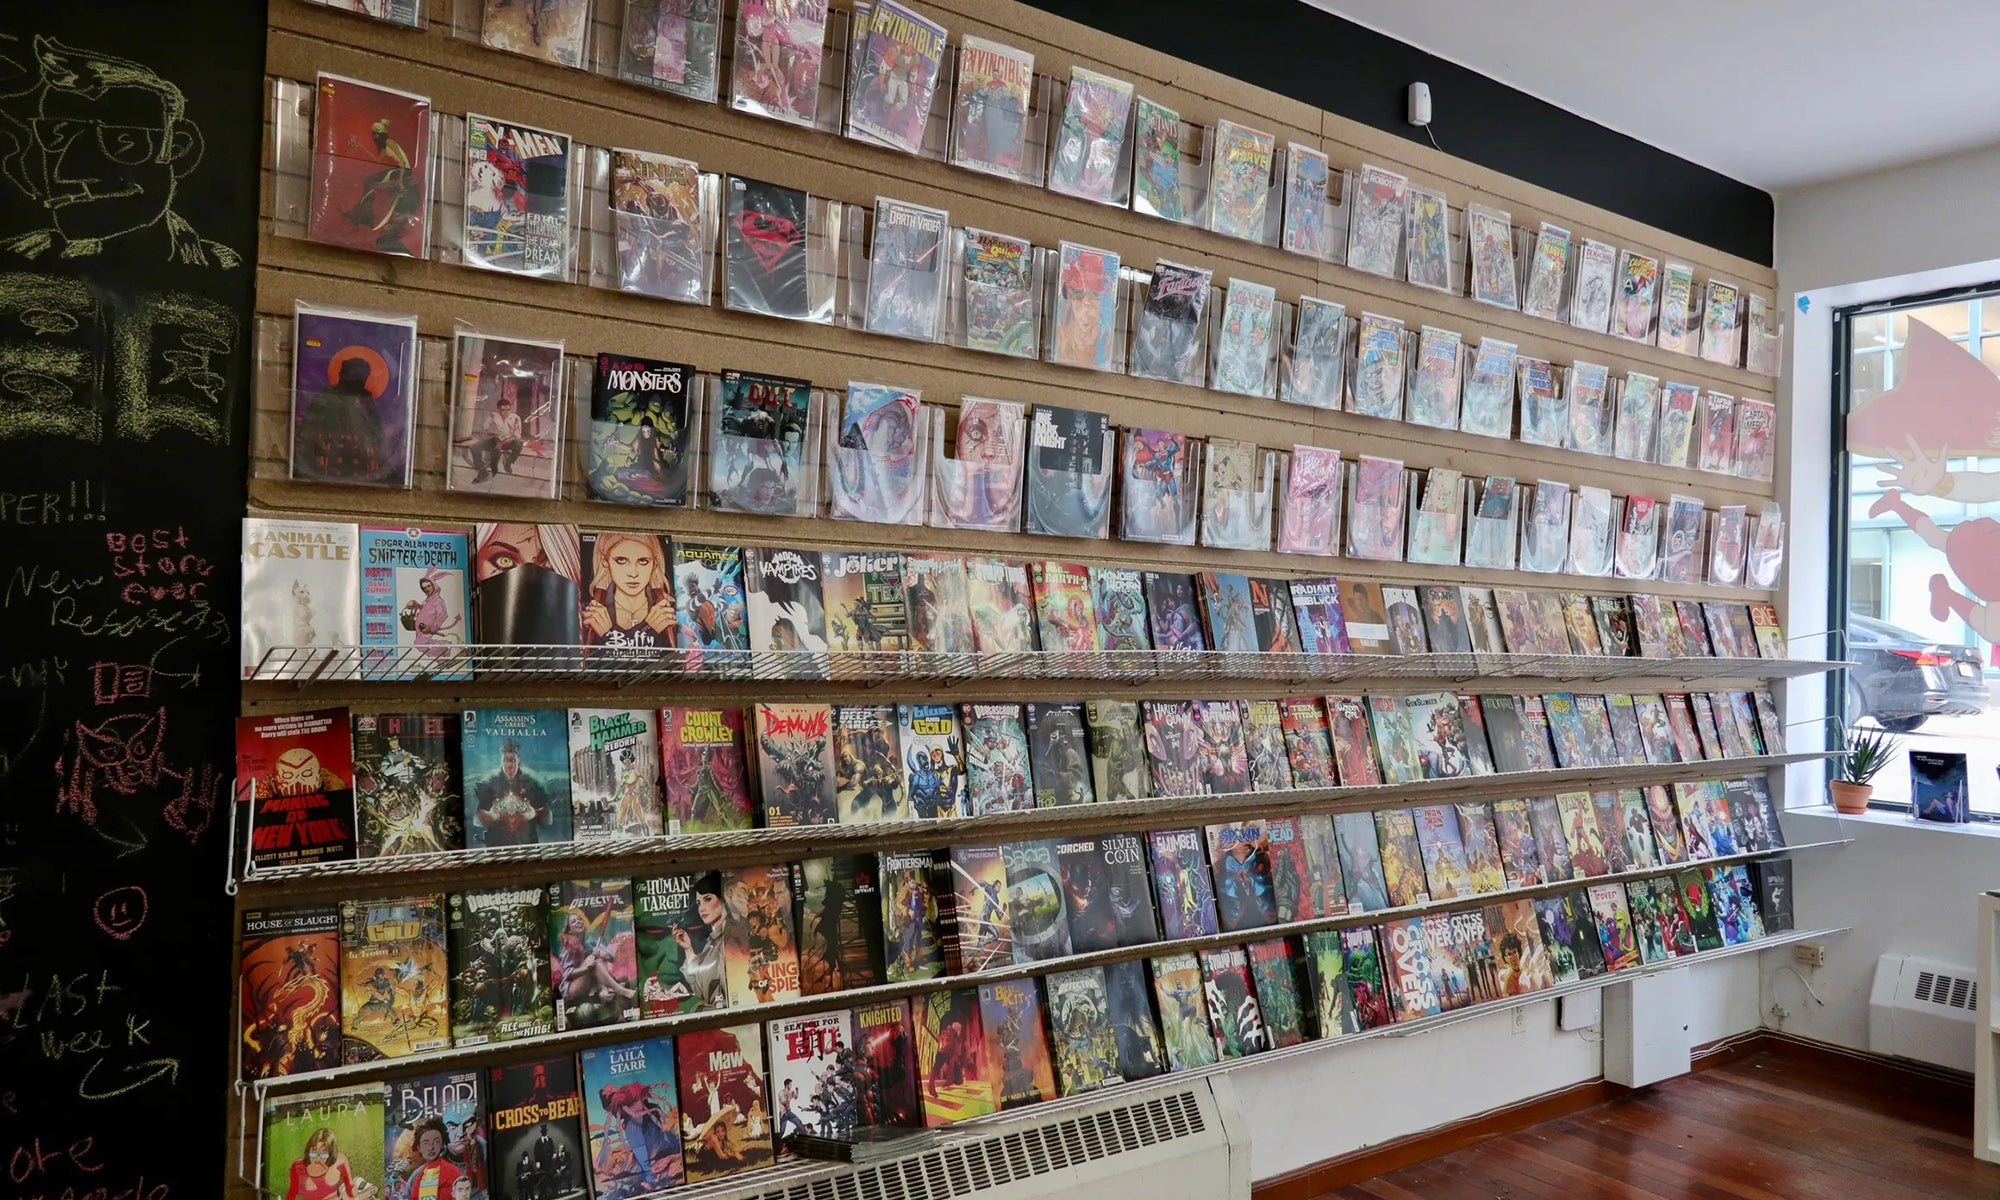 Everyone Comic & Books in Long Island City, New York